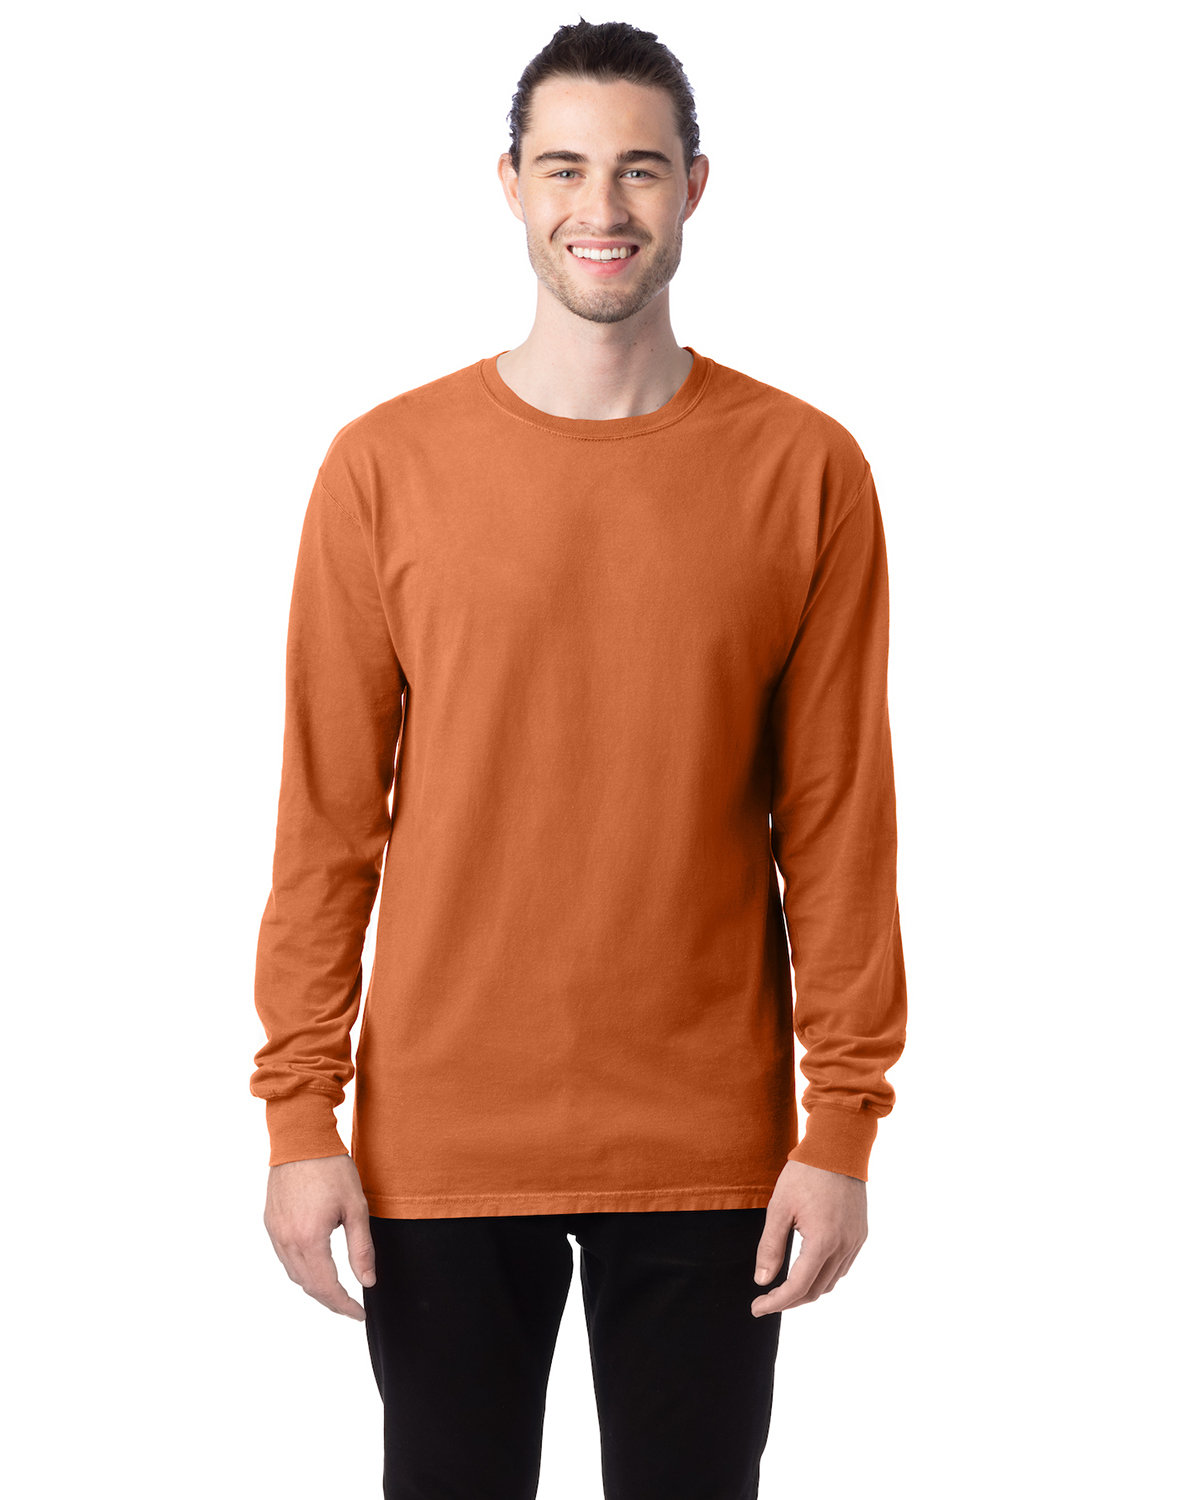 ComfortWash by Hanes Unisex Garment-Dyed Long-Sleeve T-Shirt TEXAS ORANGE 